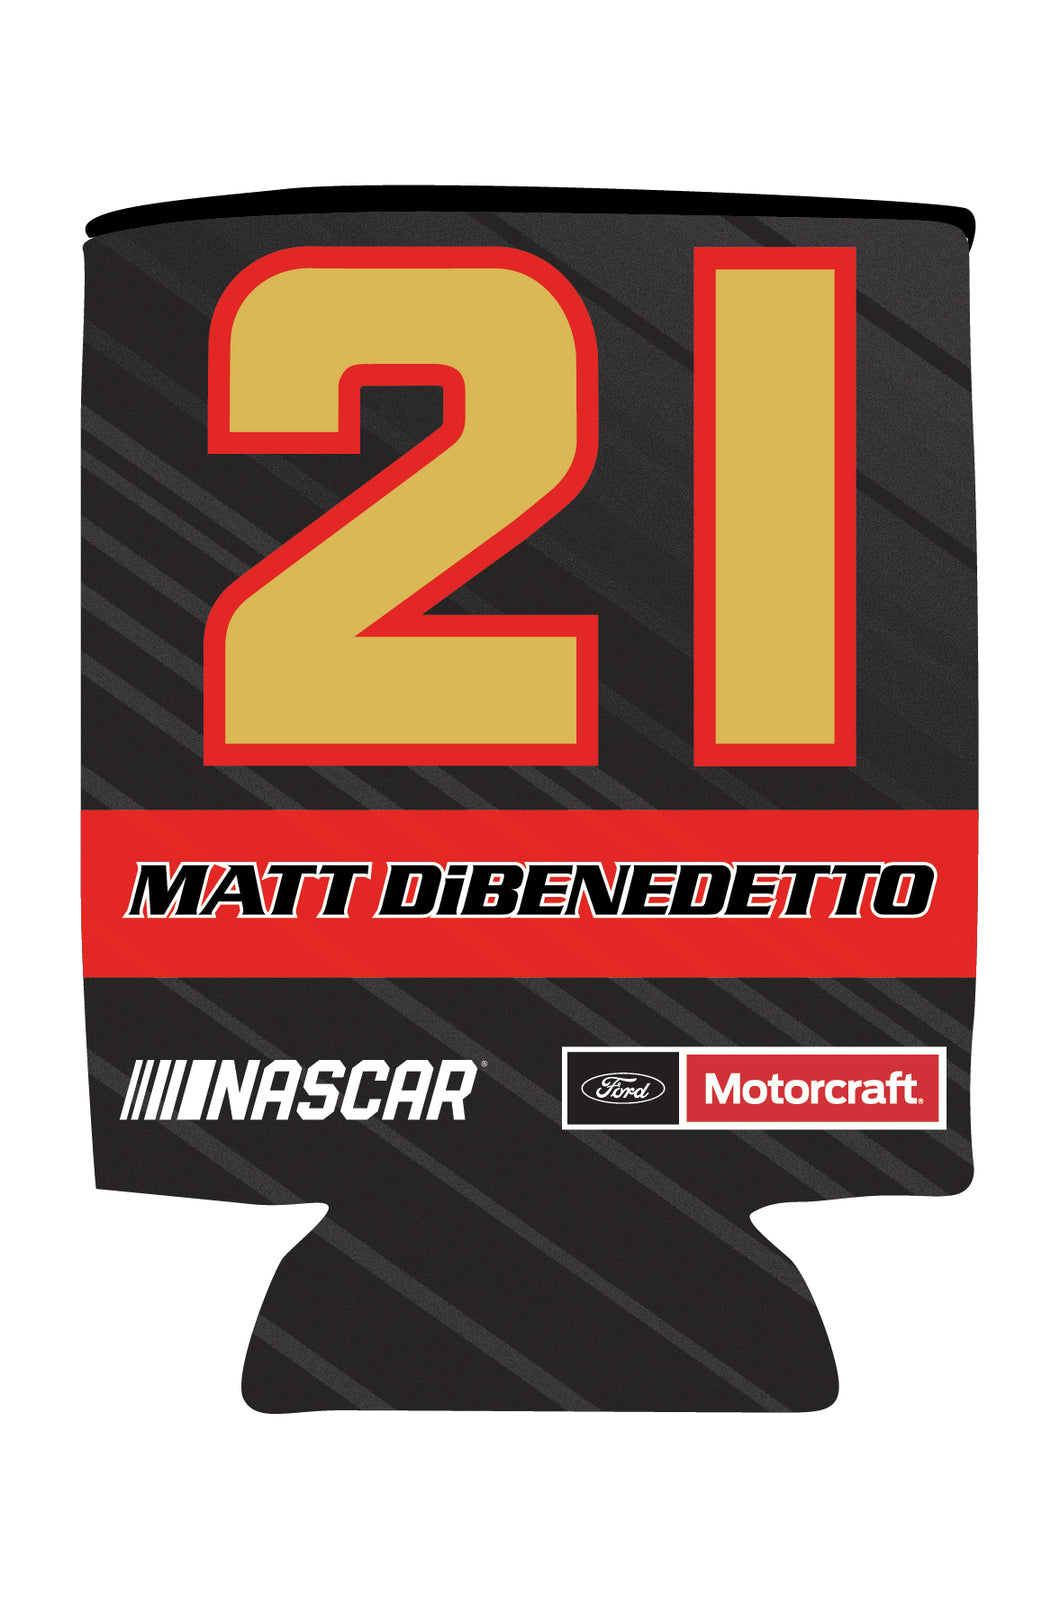 Matt DiBenedetto #21 NASCAR Cup Series Can Hugger New for 2021